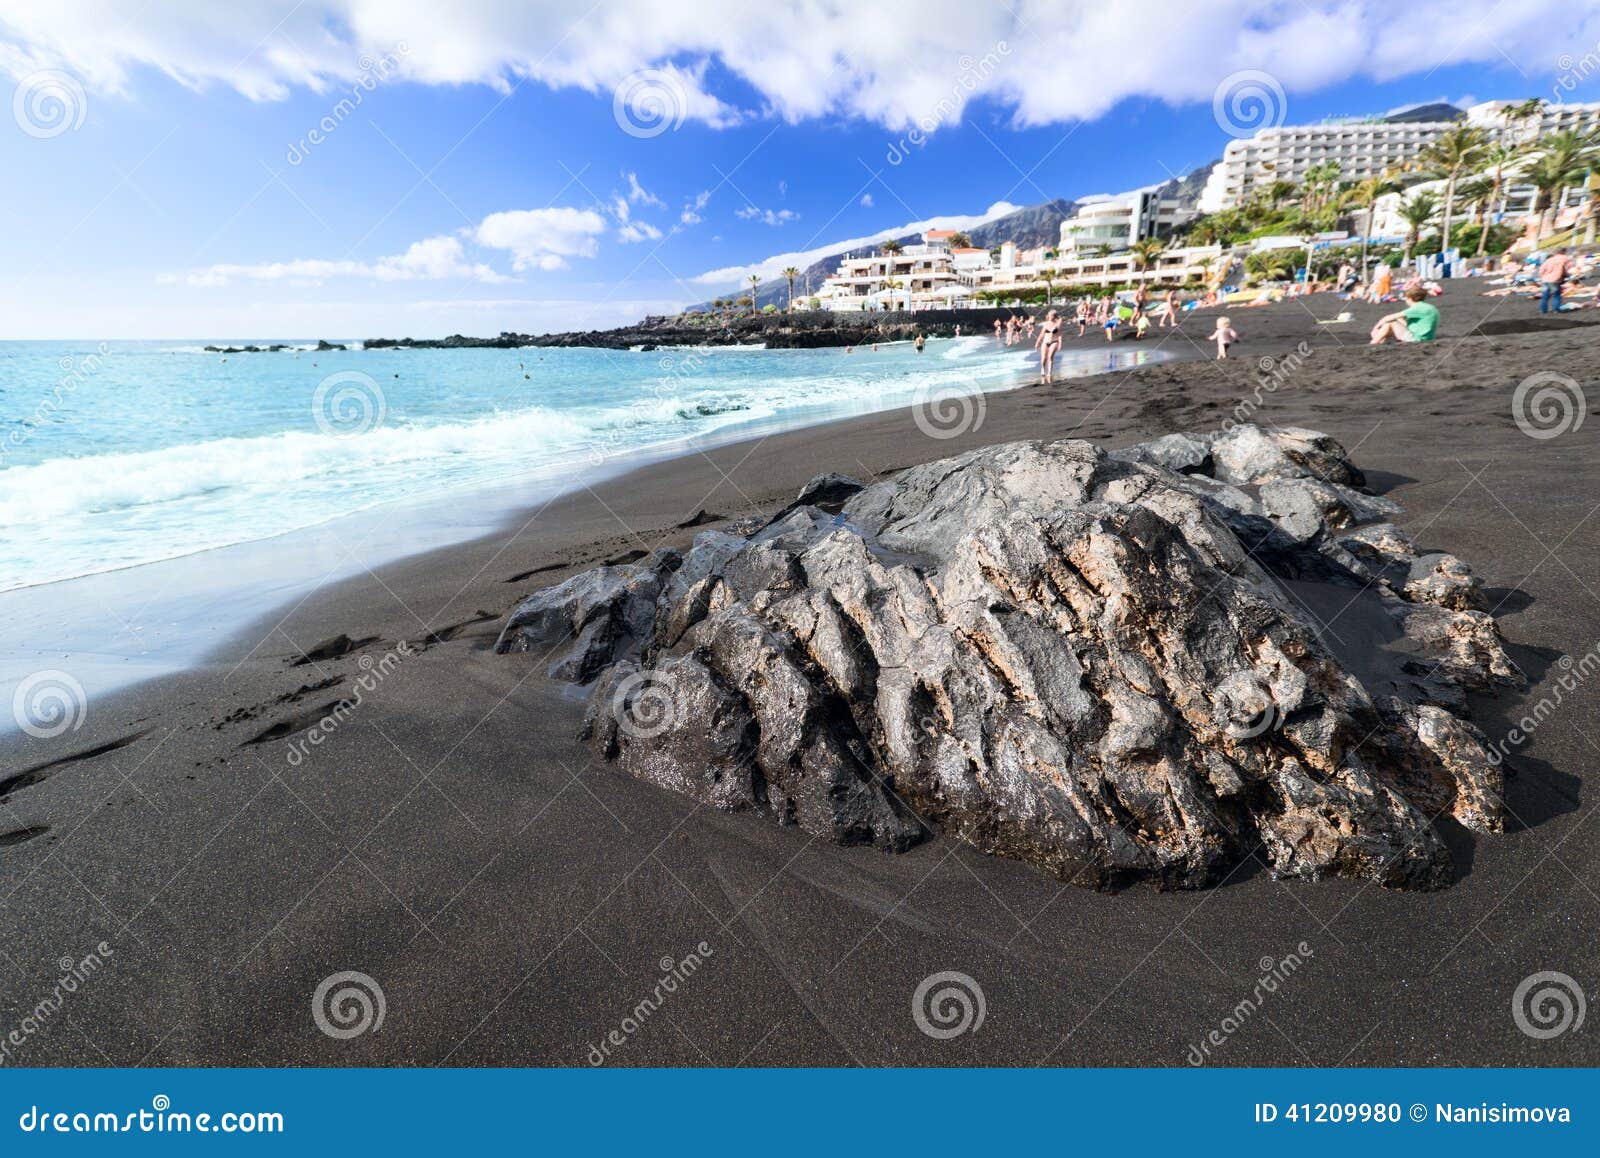 black sand beach at tenerife island spain wet rock